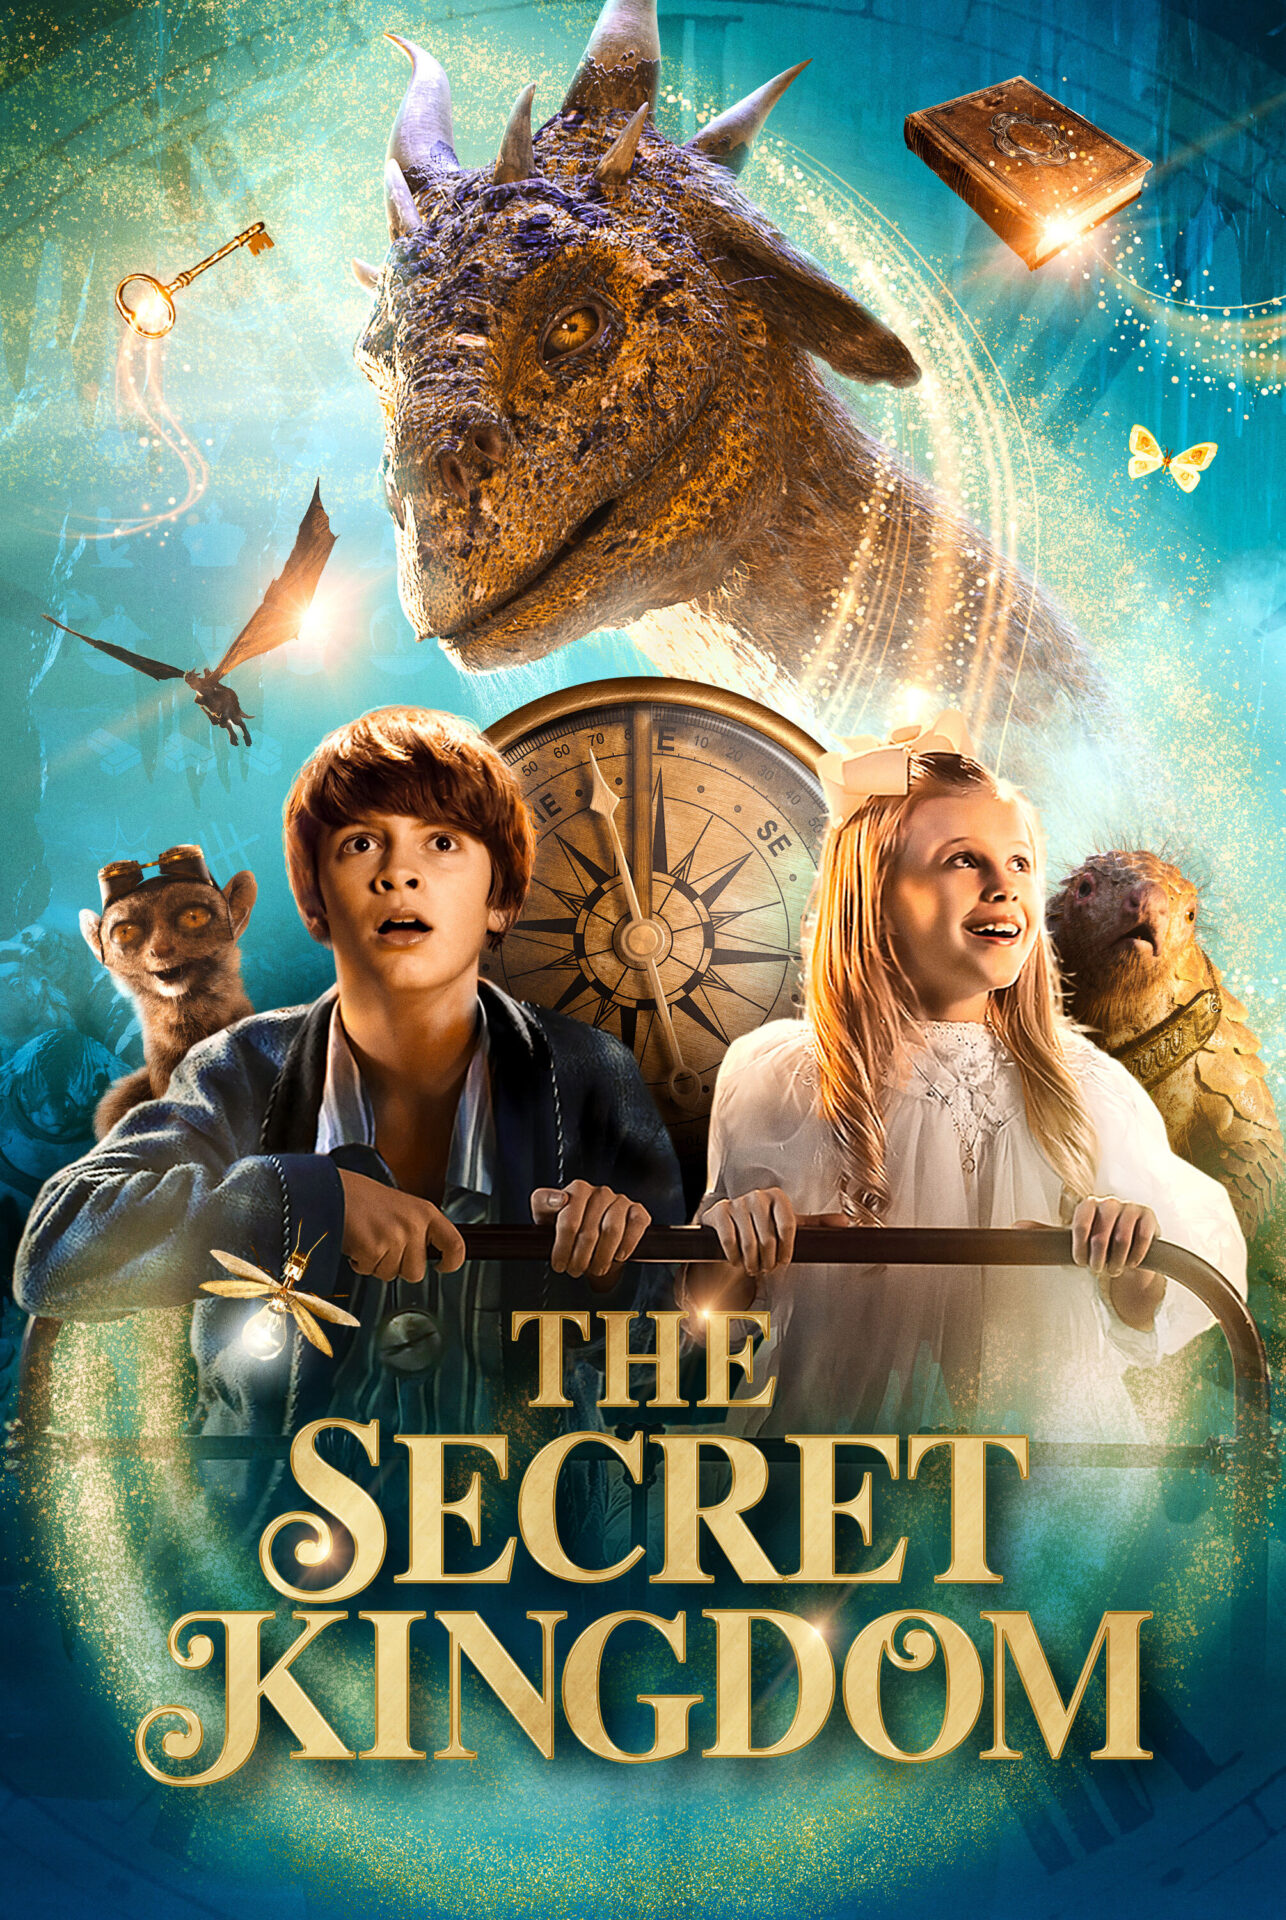 The Secret Kingdom Opens Up on VOD, Digital, June 9 OnVideo